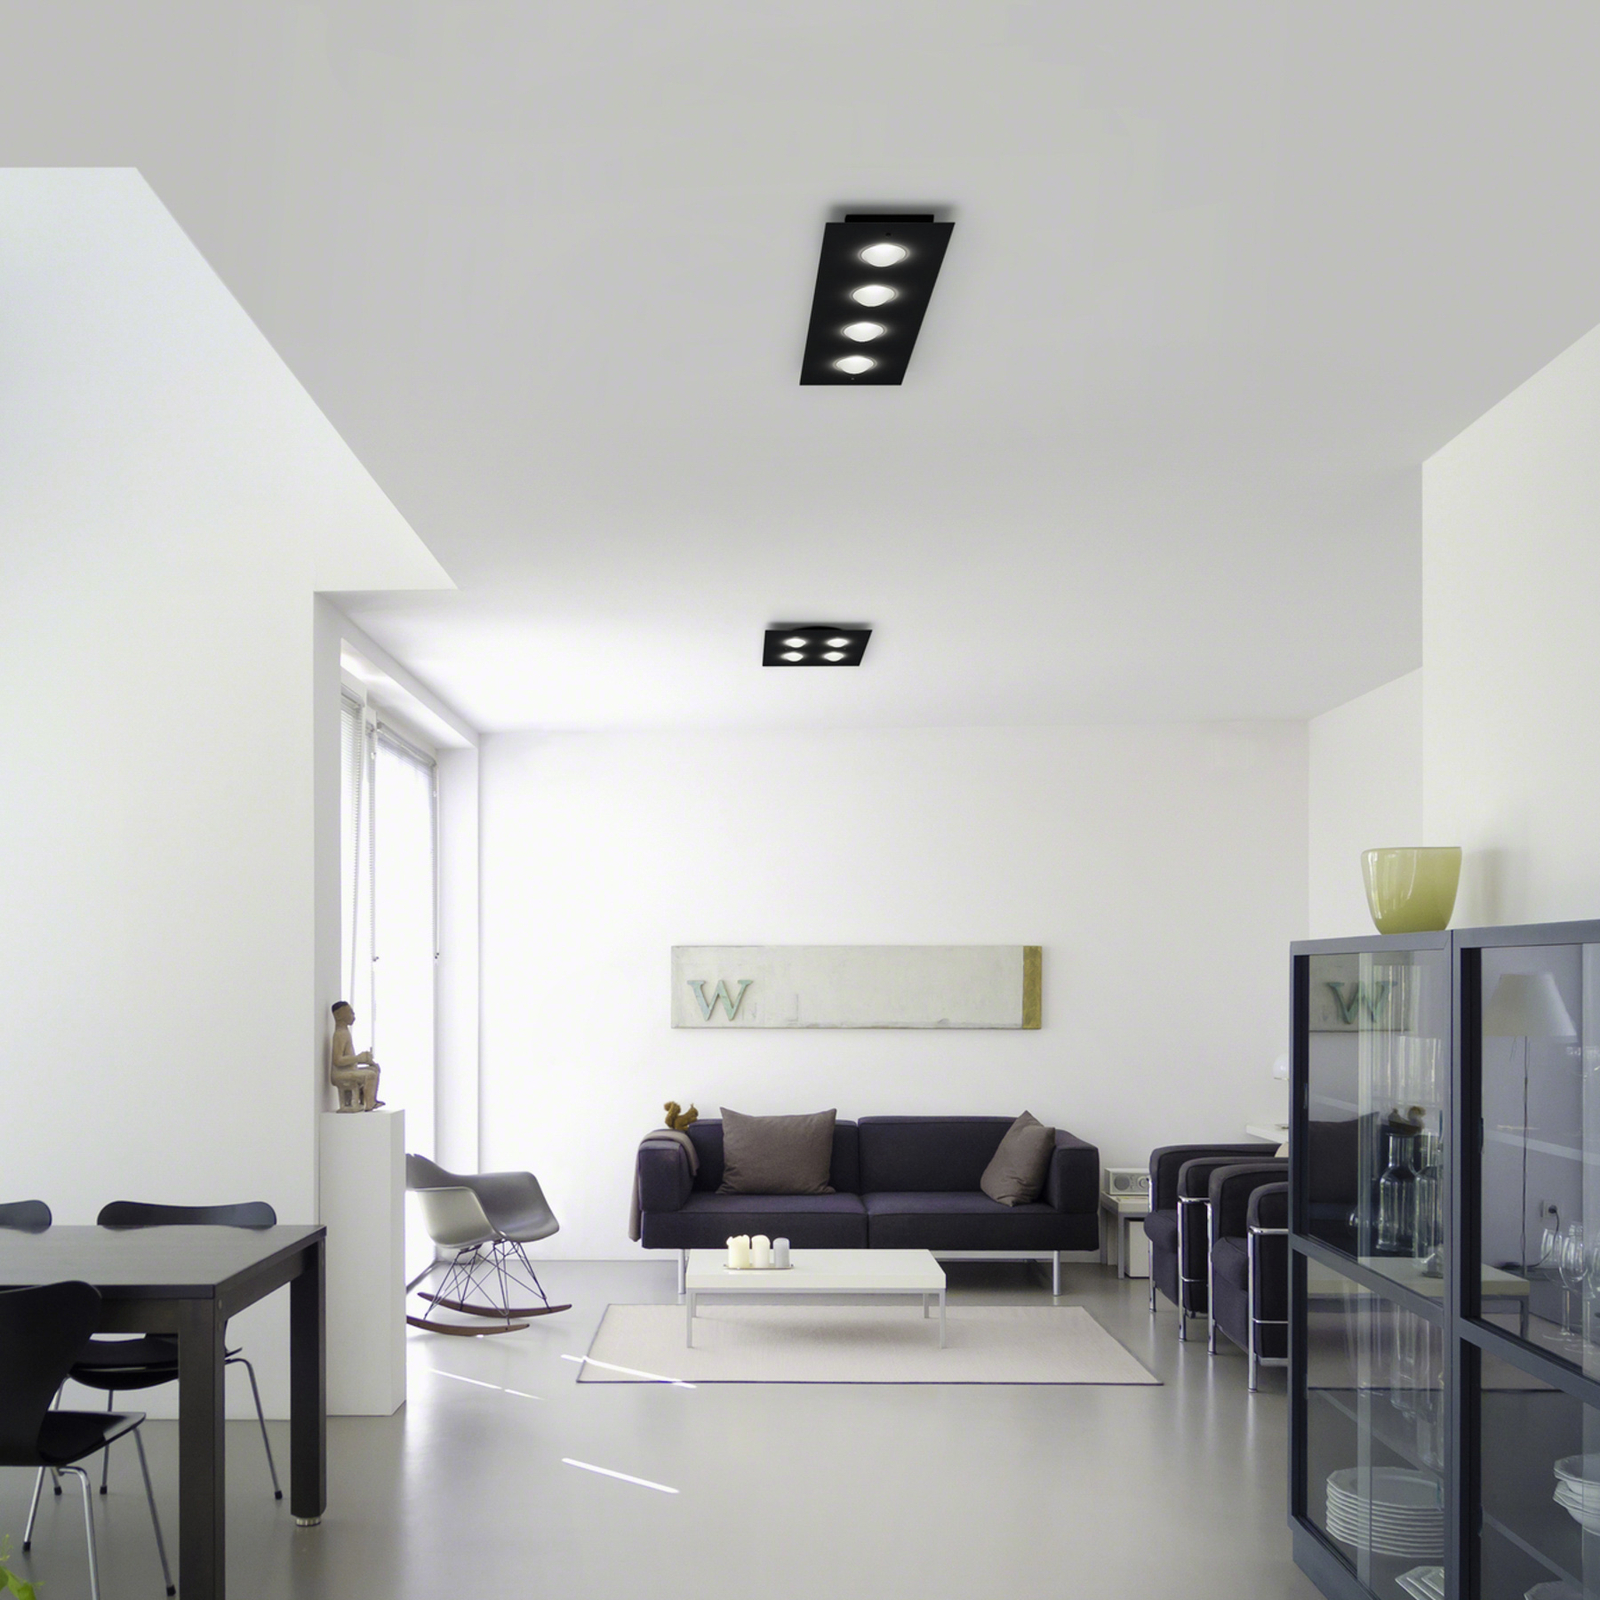 Helestra Nomi LED ceiling lamp 75x21cm dim black